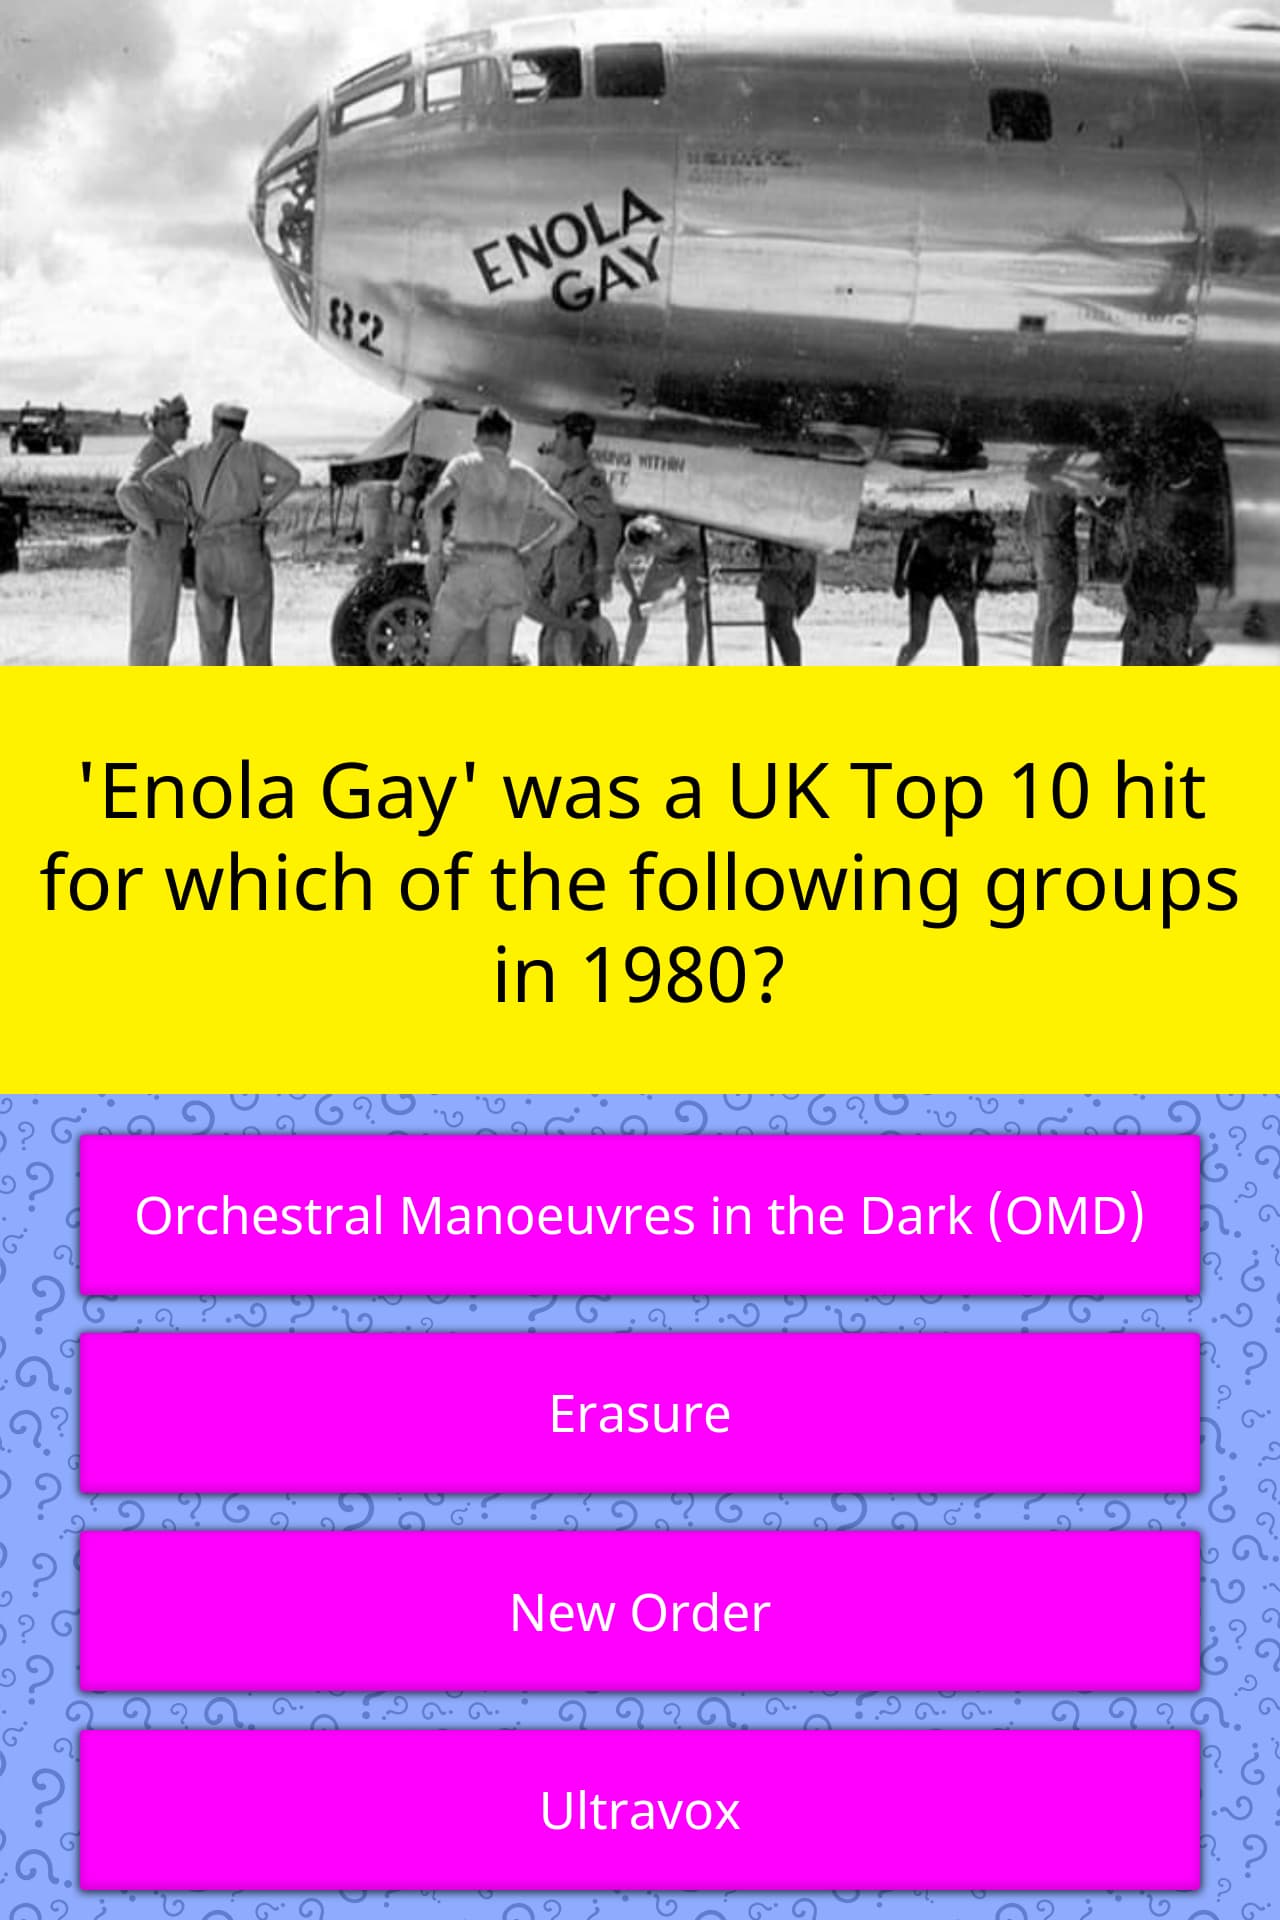 enola gay song video